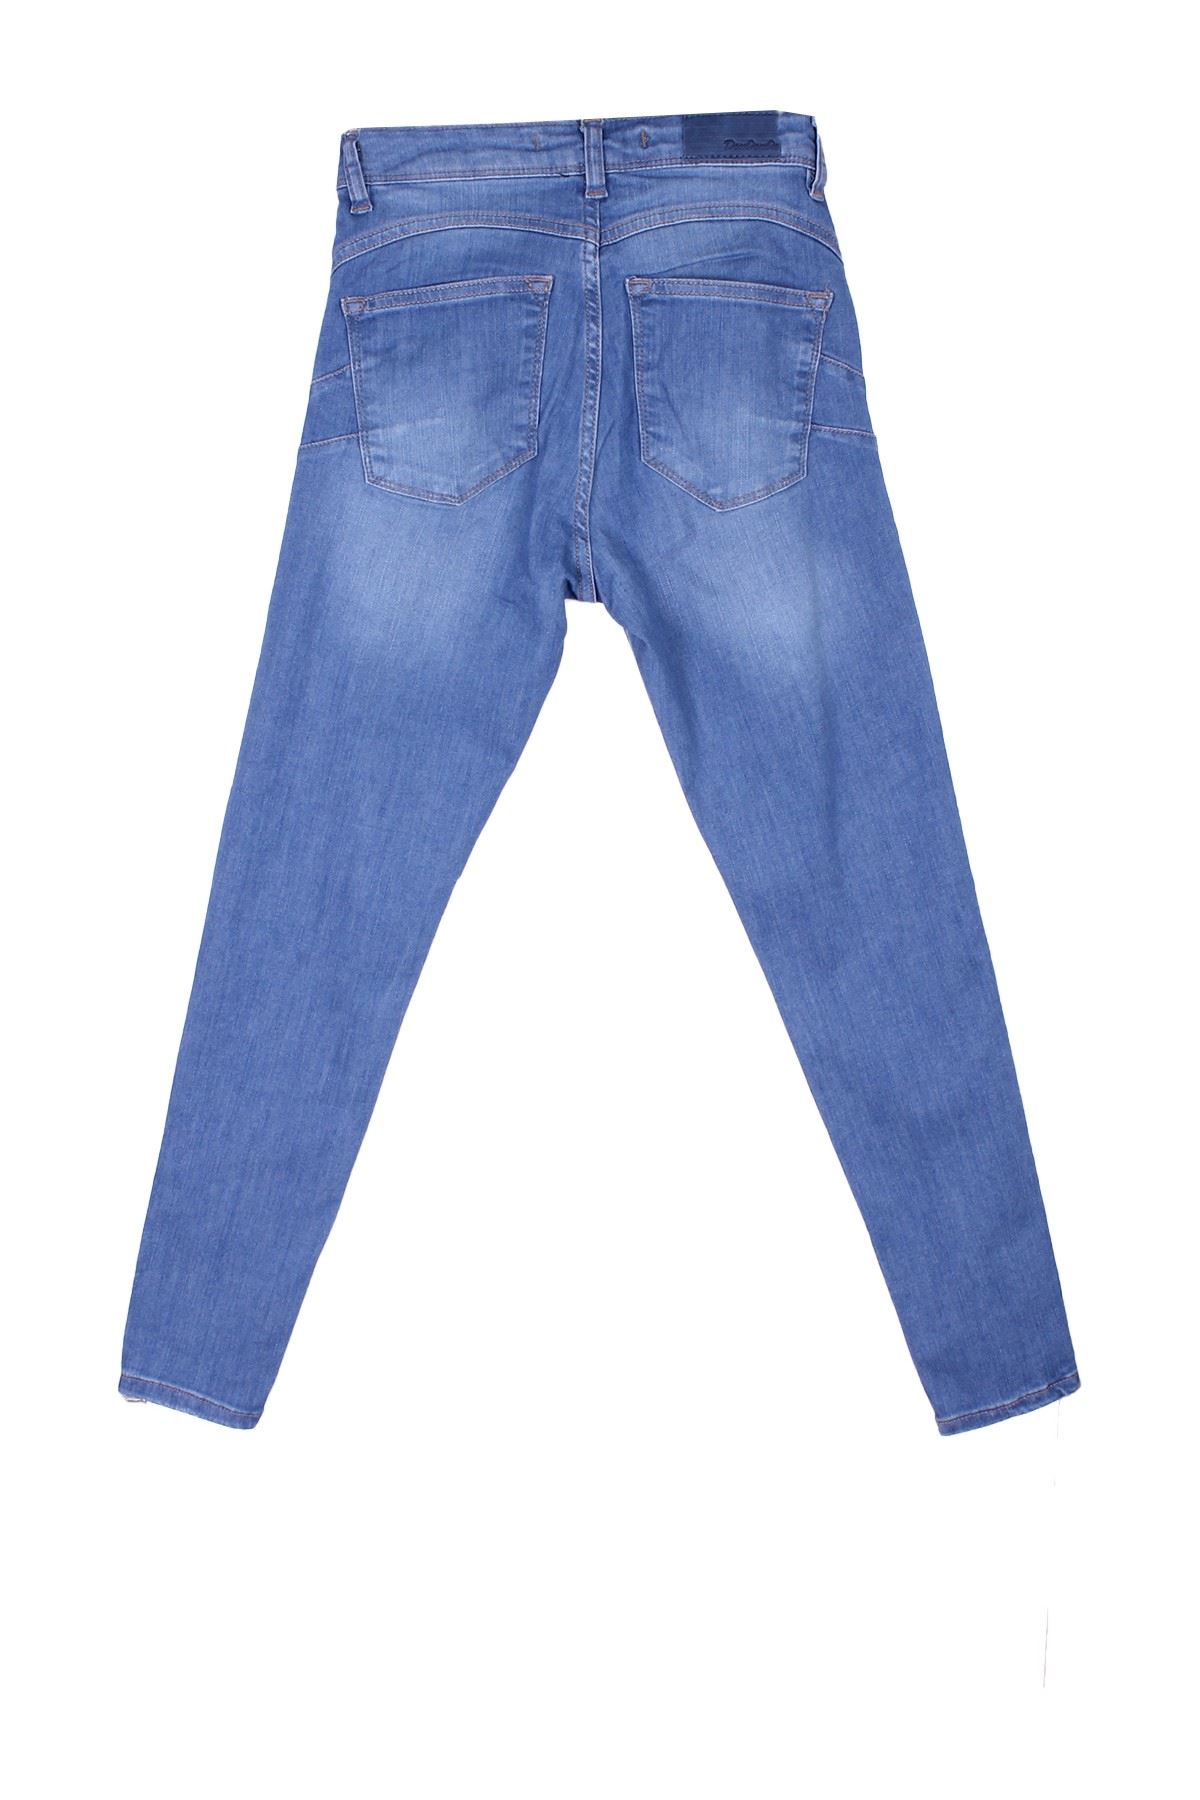 Giyinsen Kadın Mavi Jean Pantolon - 23KD52000014